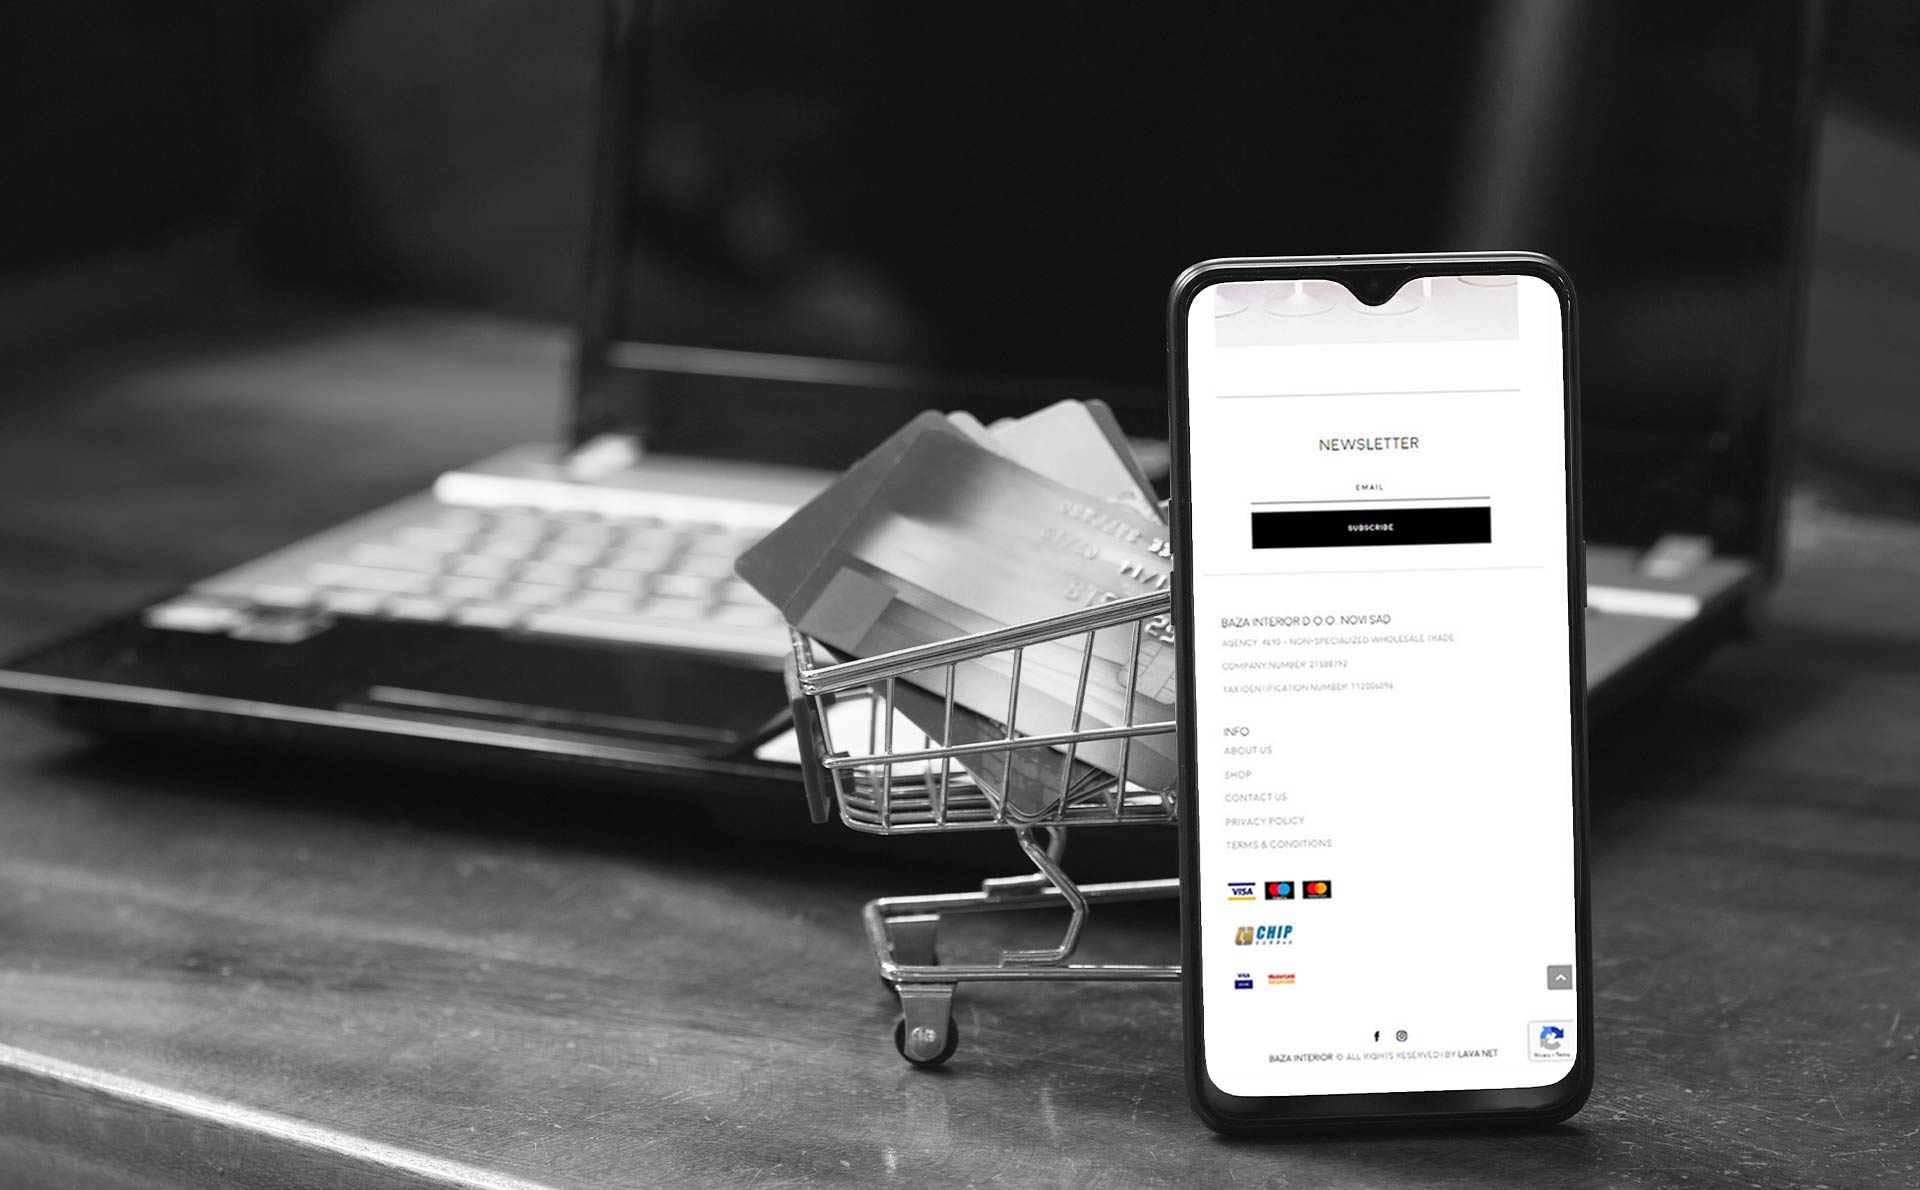 Fotografija telefona preko kojeg se vrši online kupovina i plačanje dok je mobilni telefon naslonjen na kolica za kupovinu.